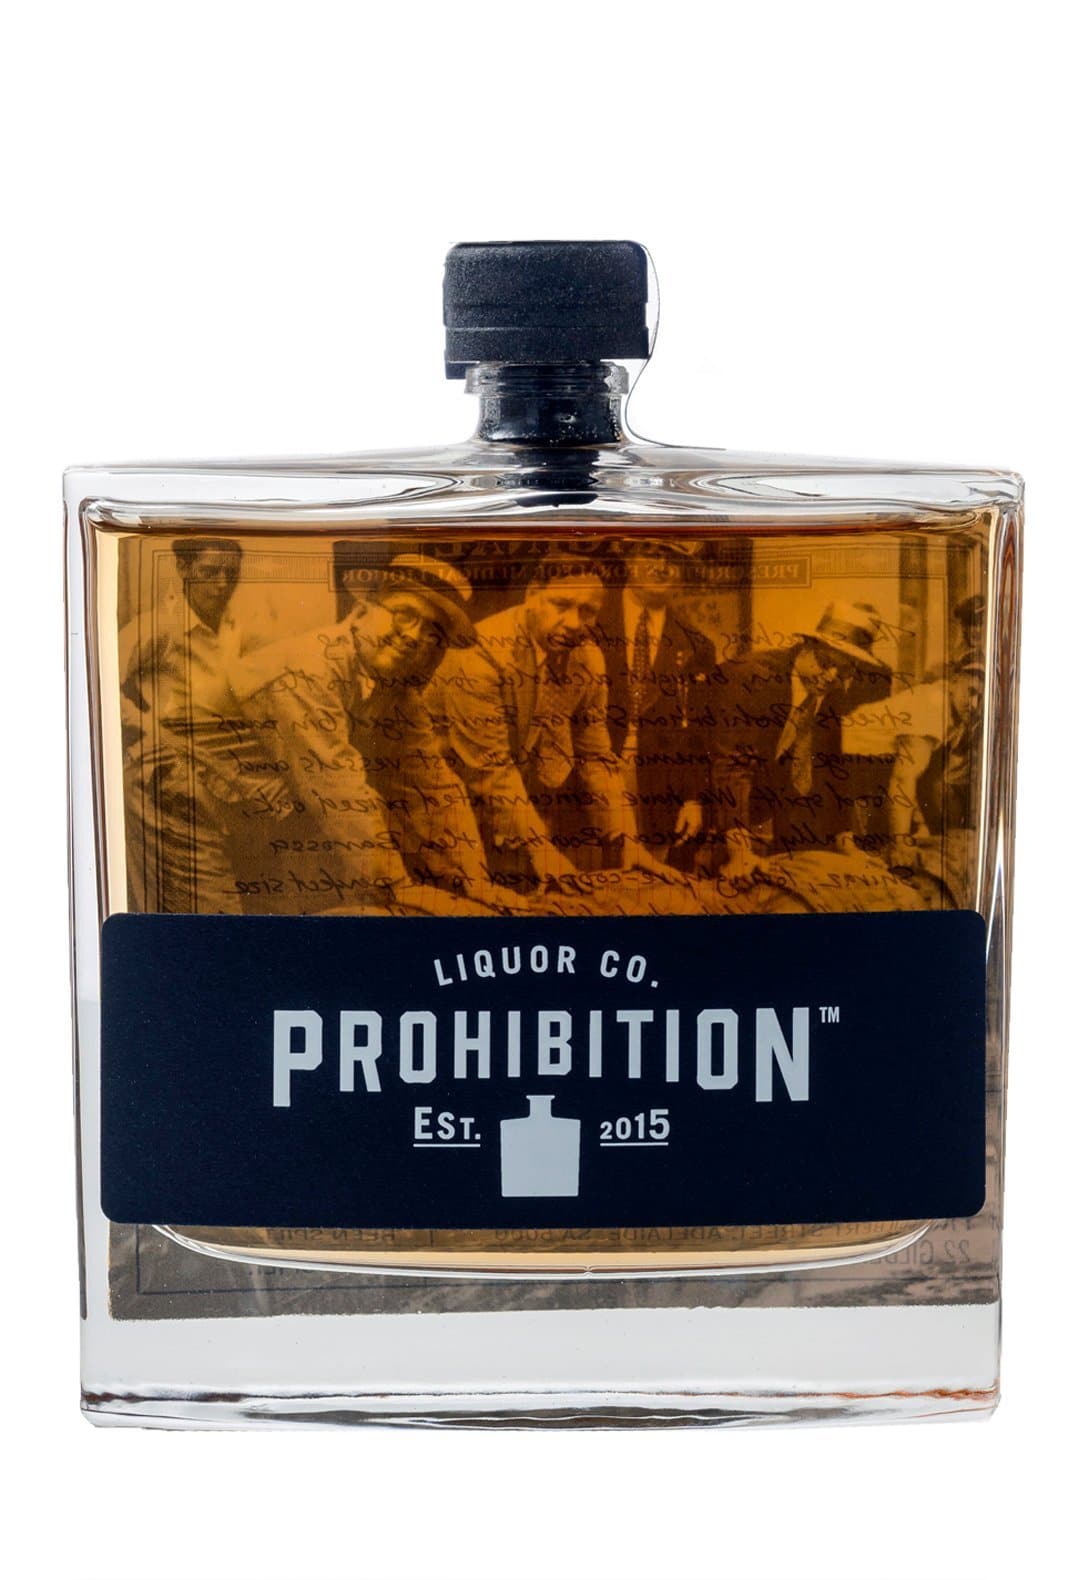 Prohibition Shiraz Barrel-Aged Gin 59% 100ml | Gin | Shop online at Spirits of France